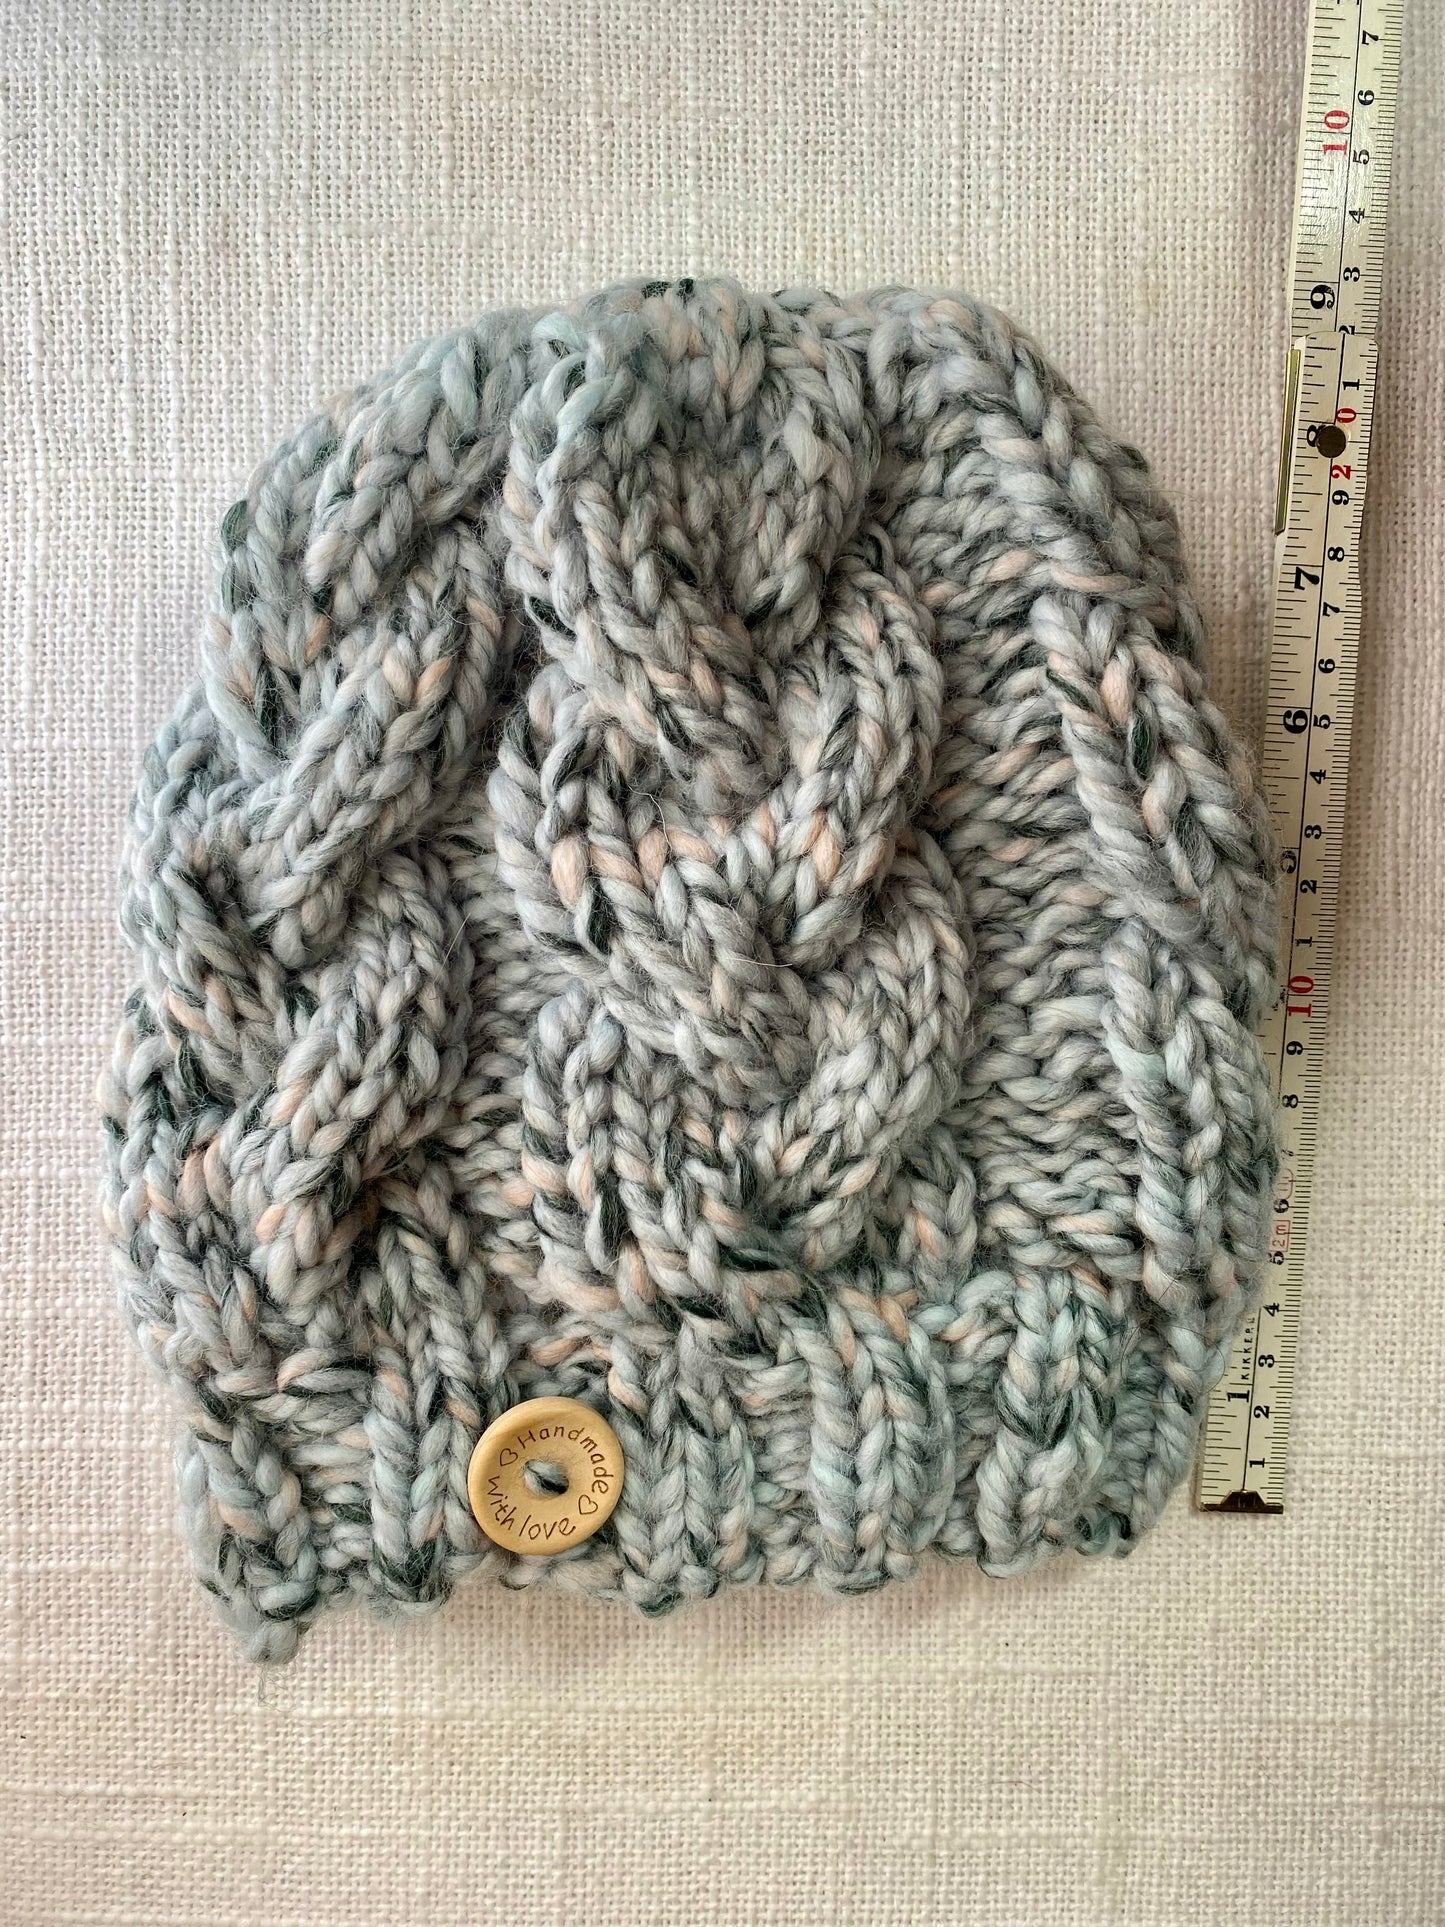 Cozy Cables Hat - Wool Blend Fiber in Hydrangea